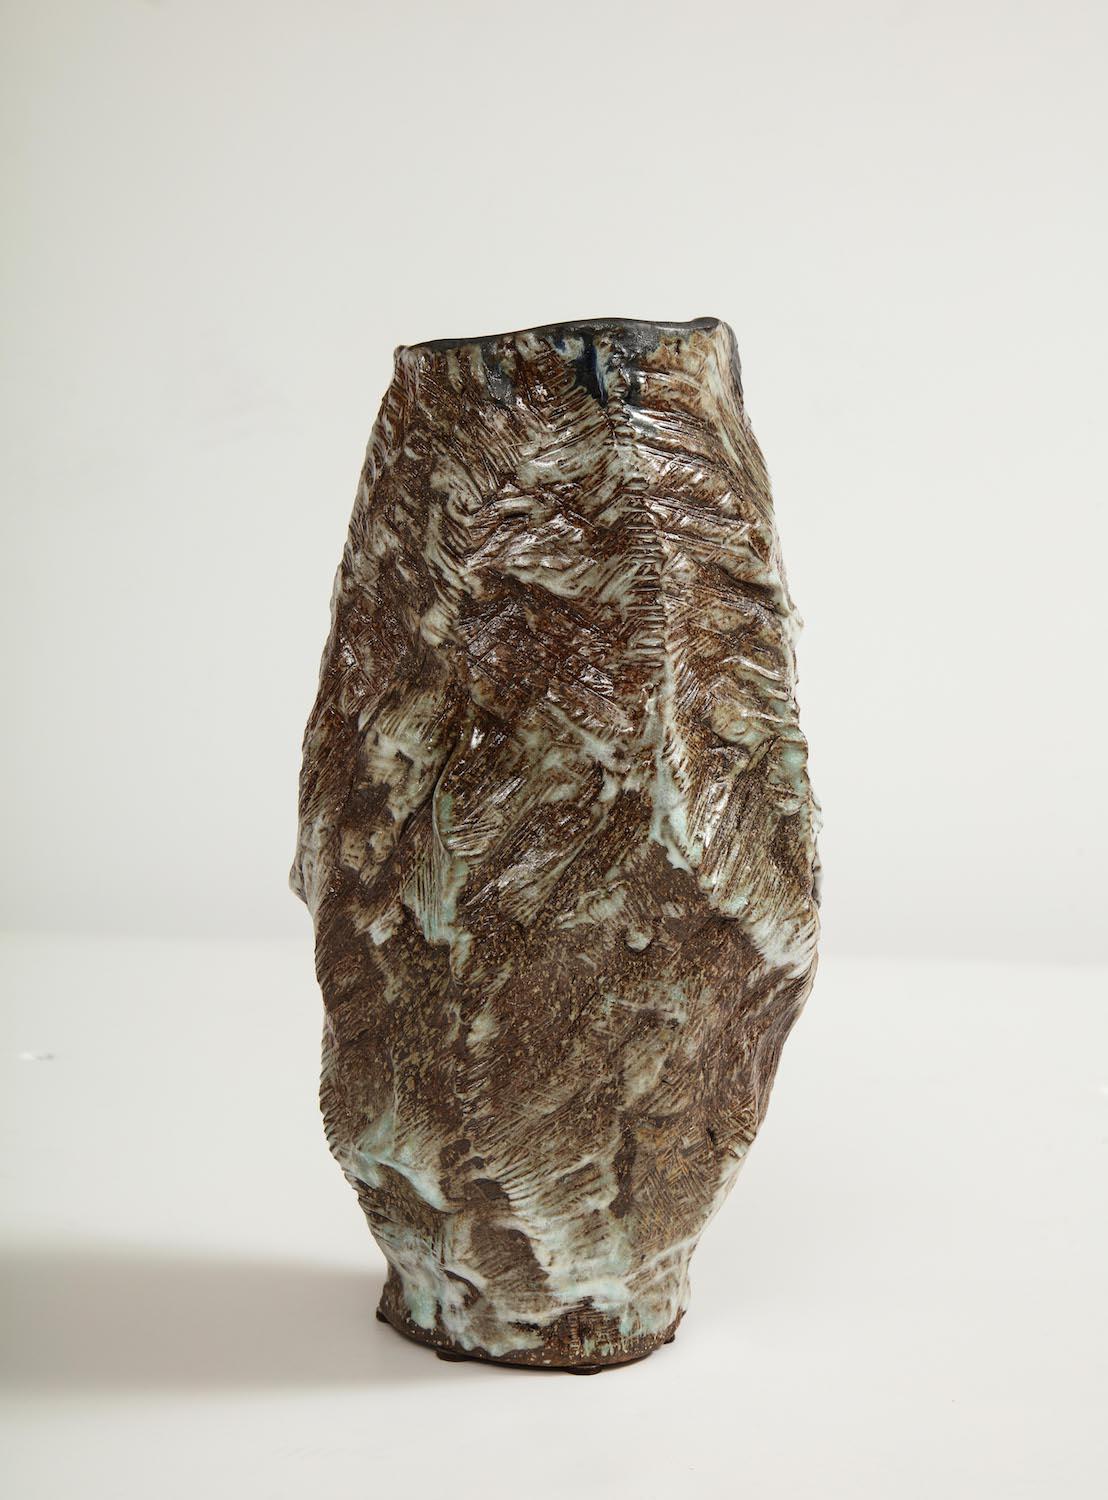 Hand-built, glazed stoneware vase form. Signed and dated on underside.